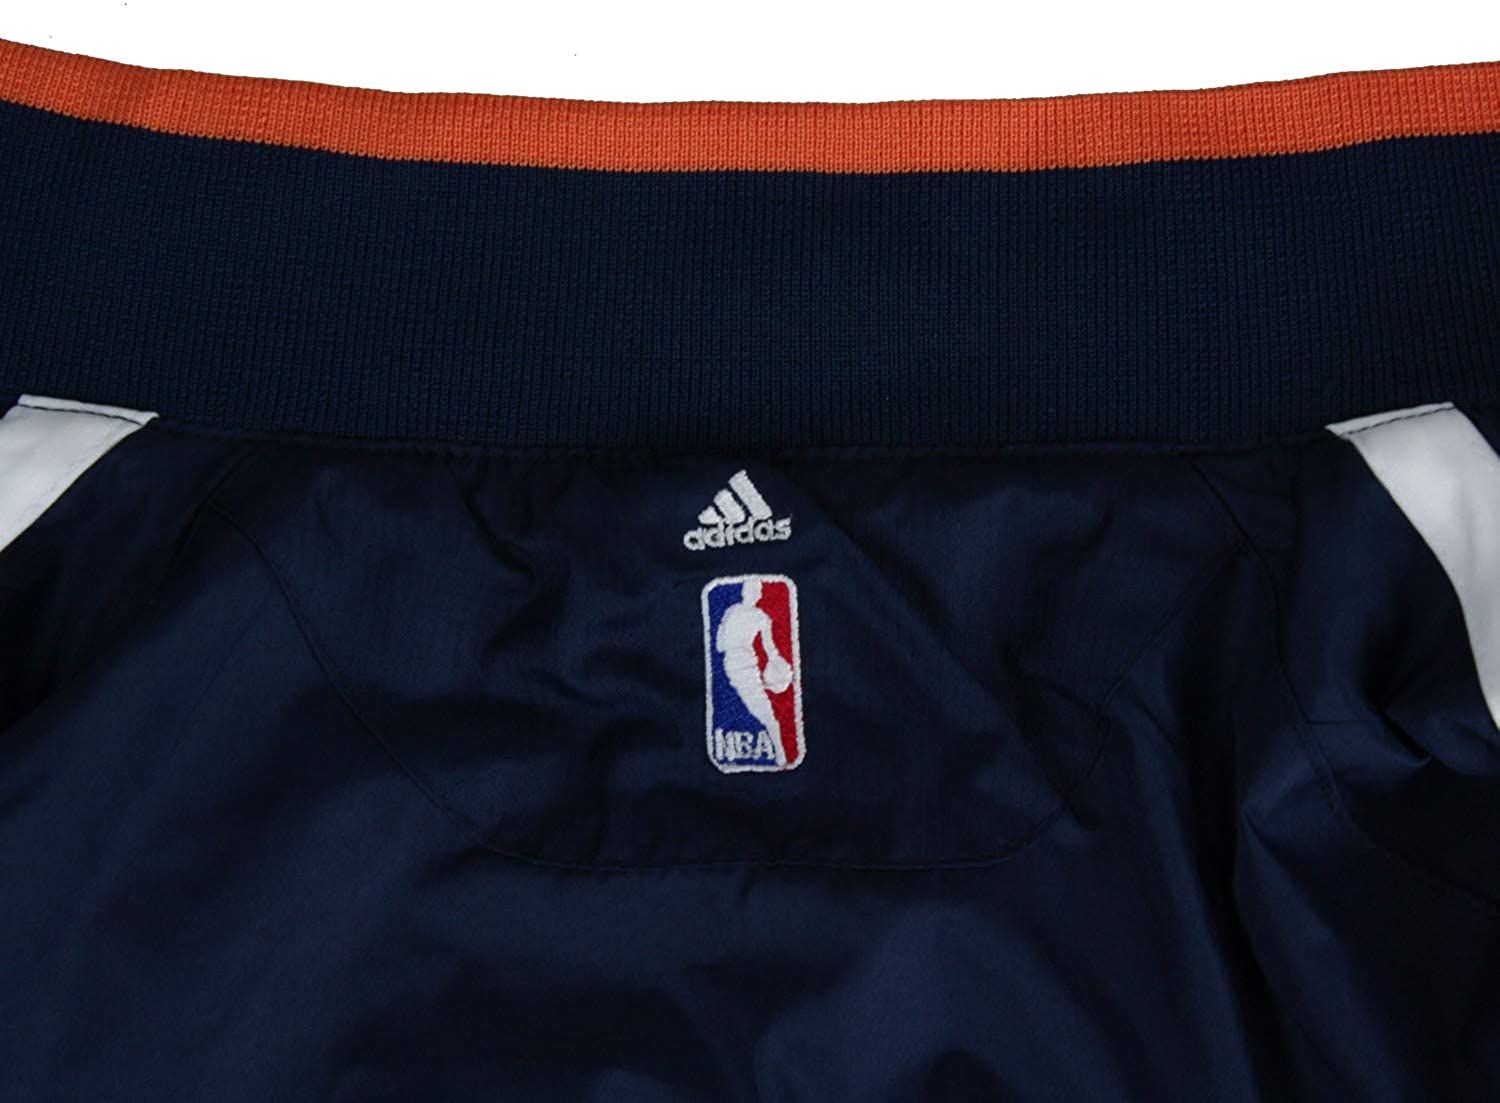 Adidas NBA Youth Charlotte Bobcats On Court Reversible Jacket - image 5 of 8